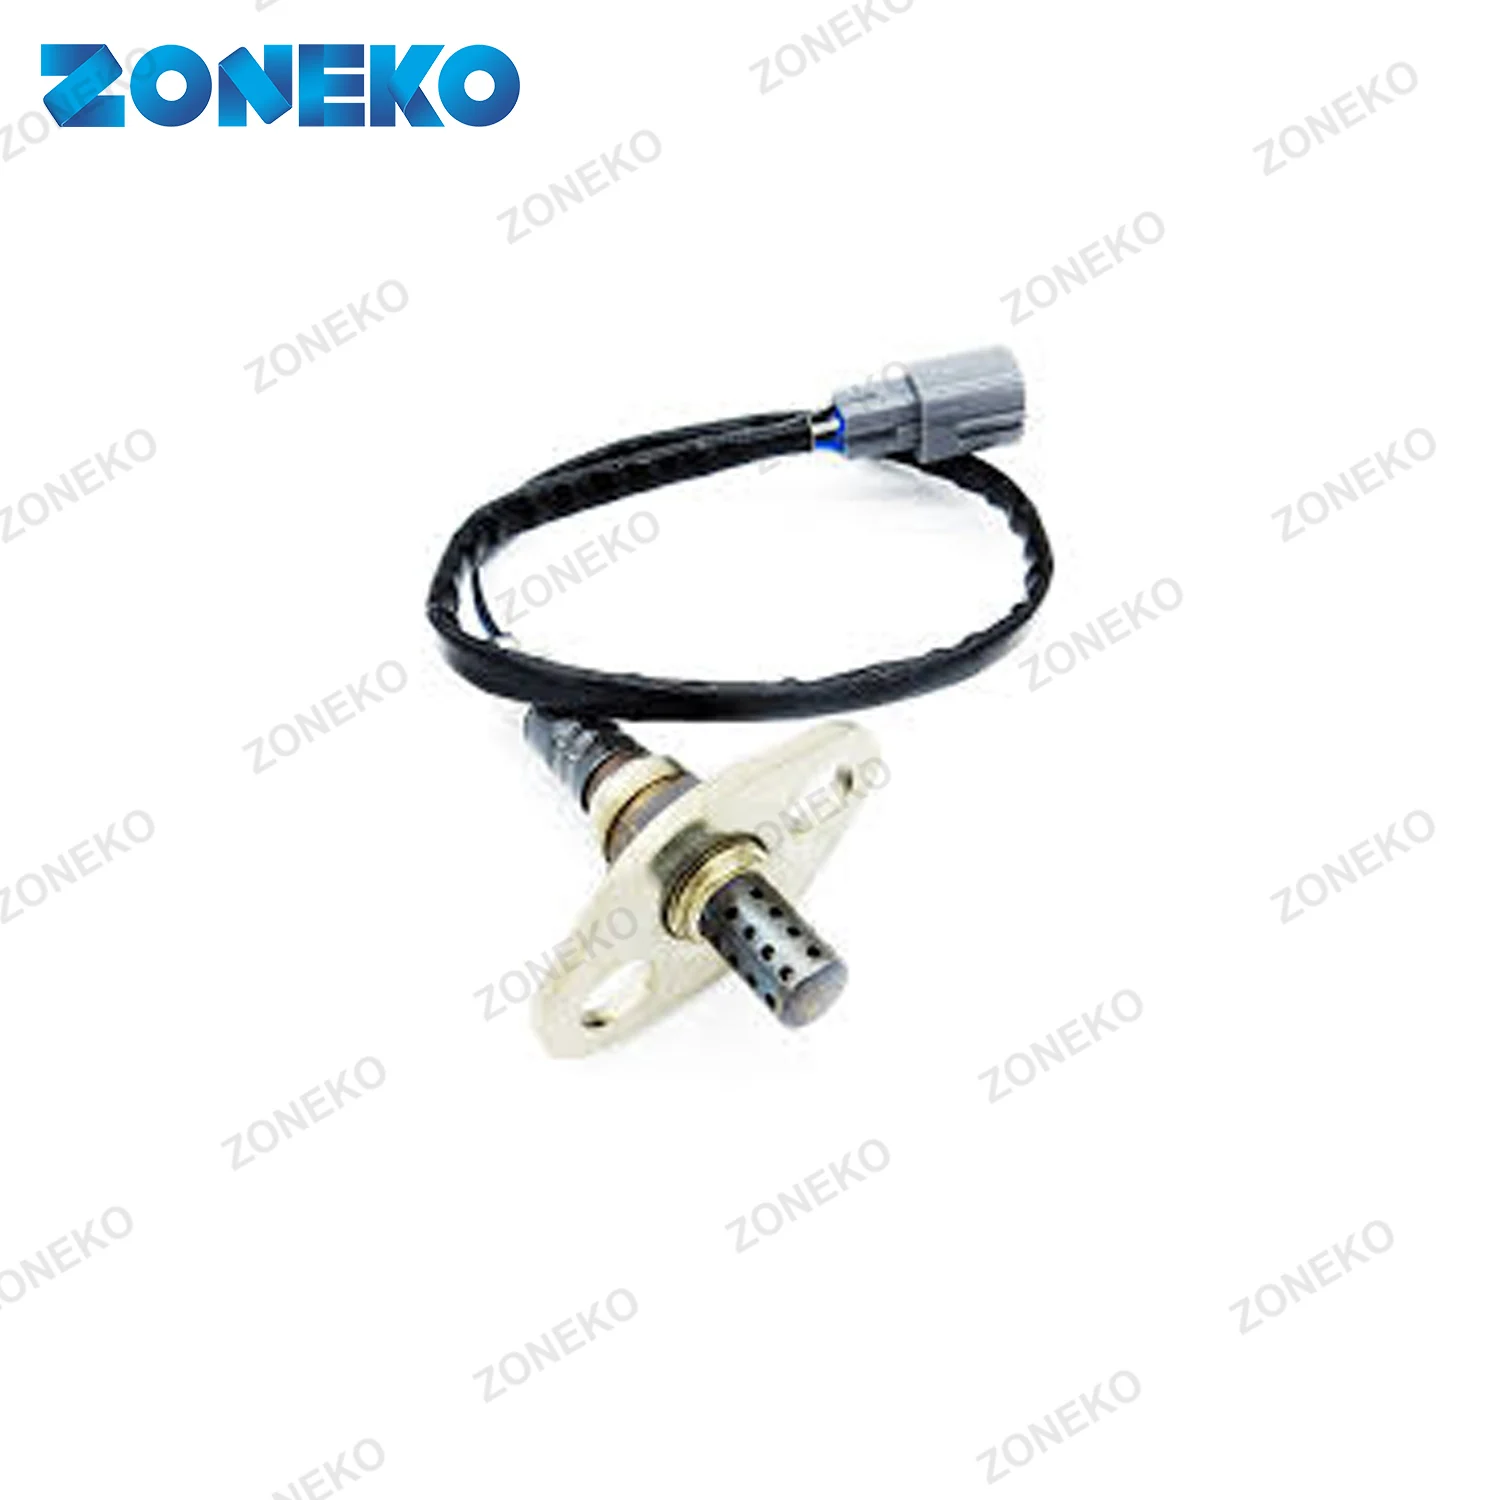 Zoneko 高品质的氧气传感器89465-29495 4 Runner N18 - Buy Carina E 